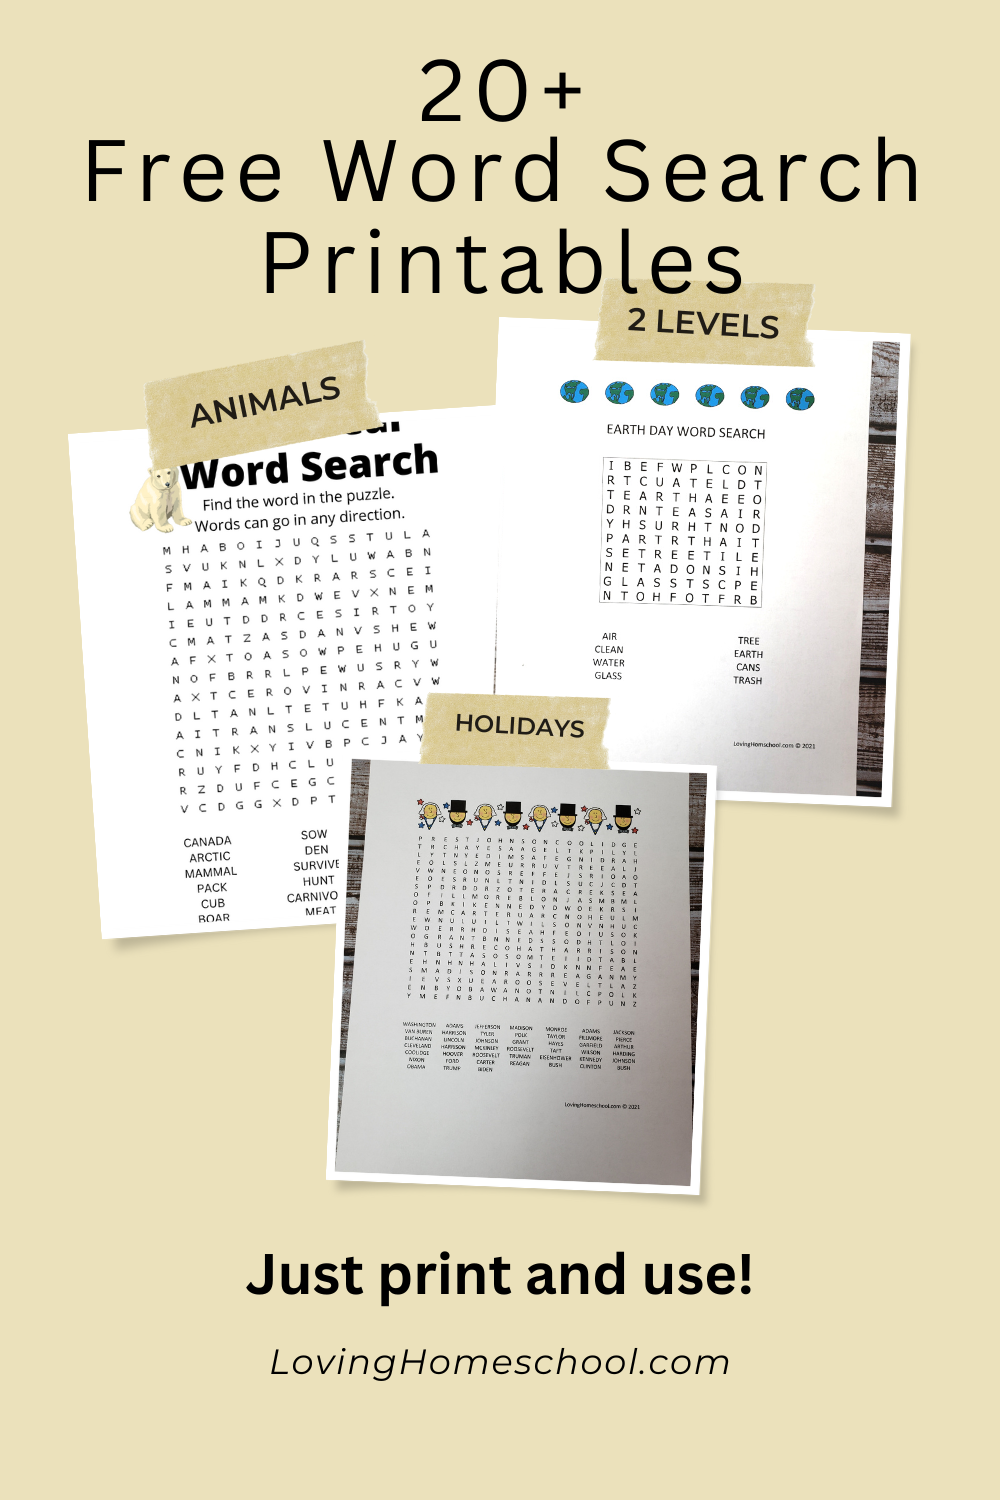 20+ Free Word Search Printables Pinterest Pin